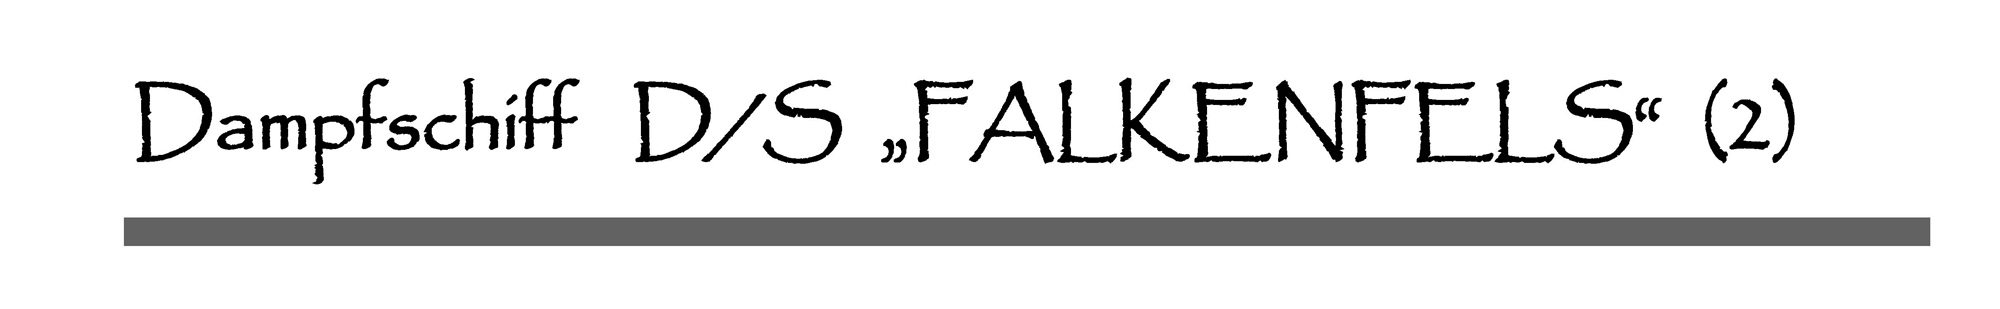 Falk05 txt